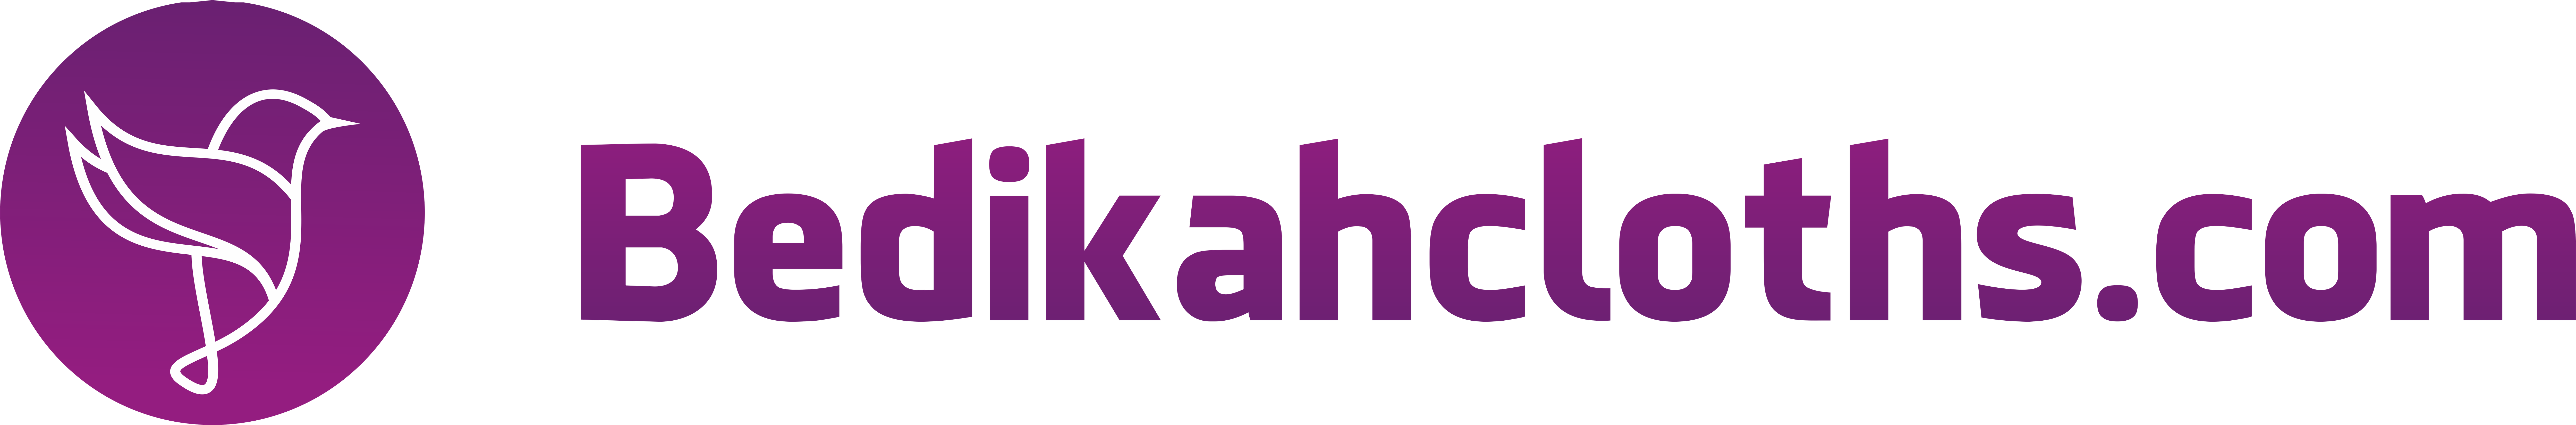 bedikahcloths.com logo